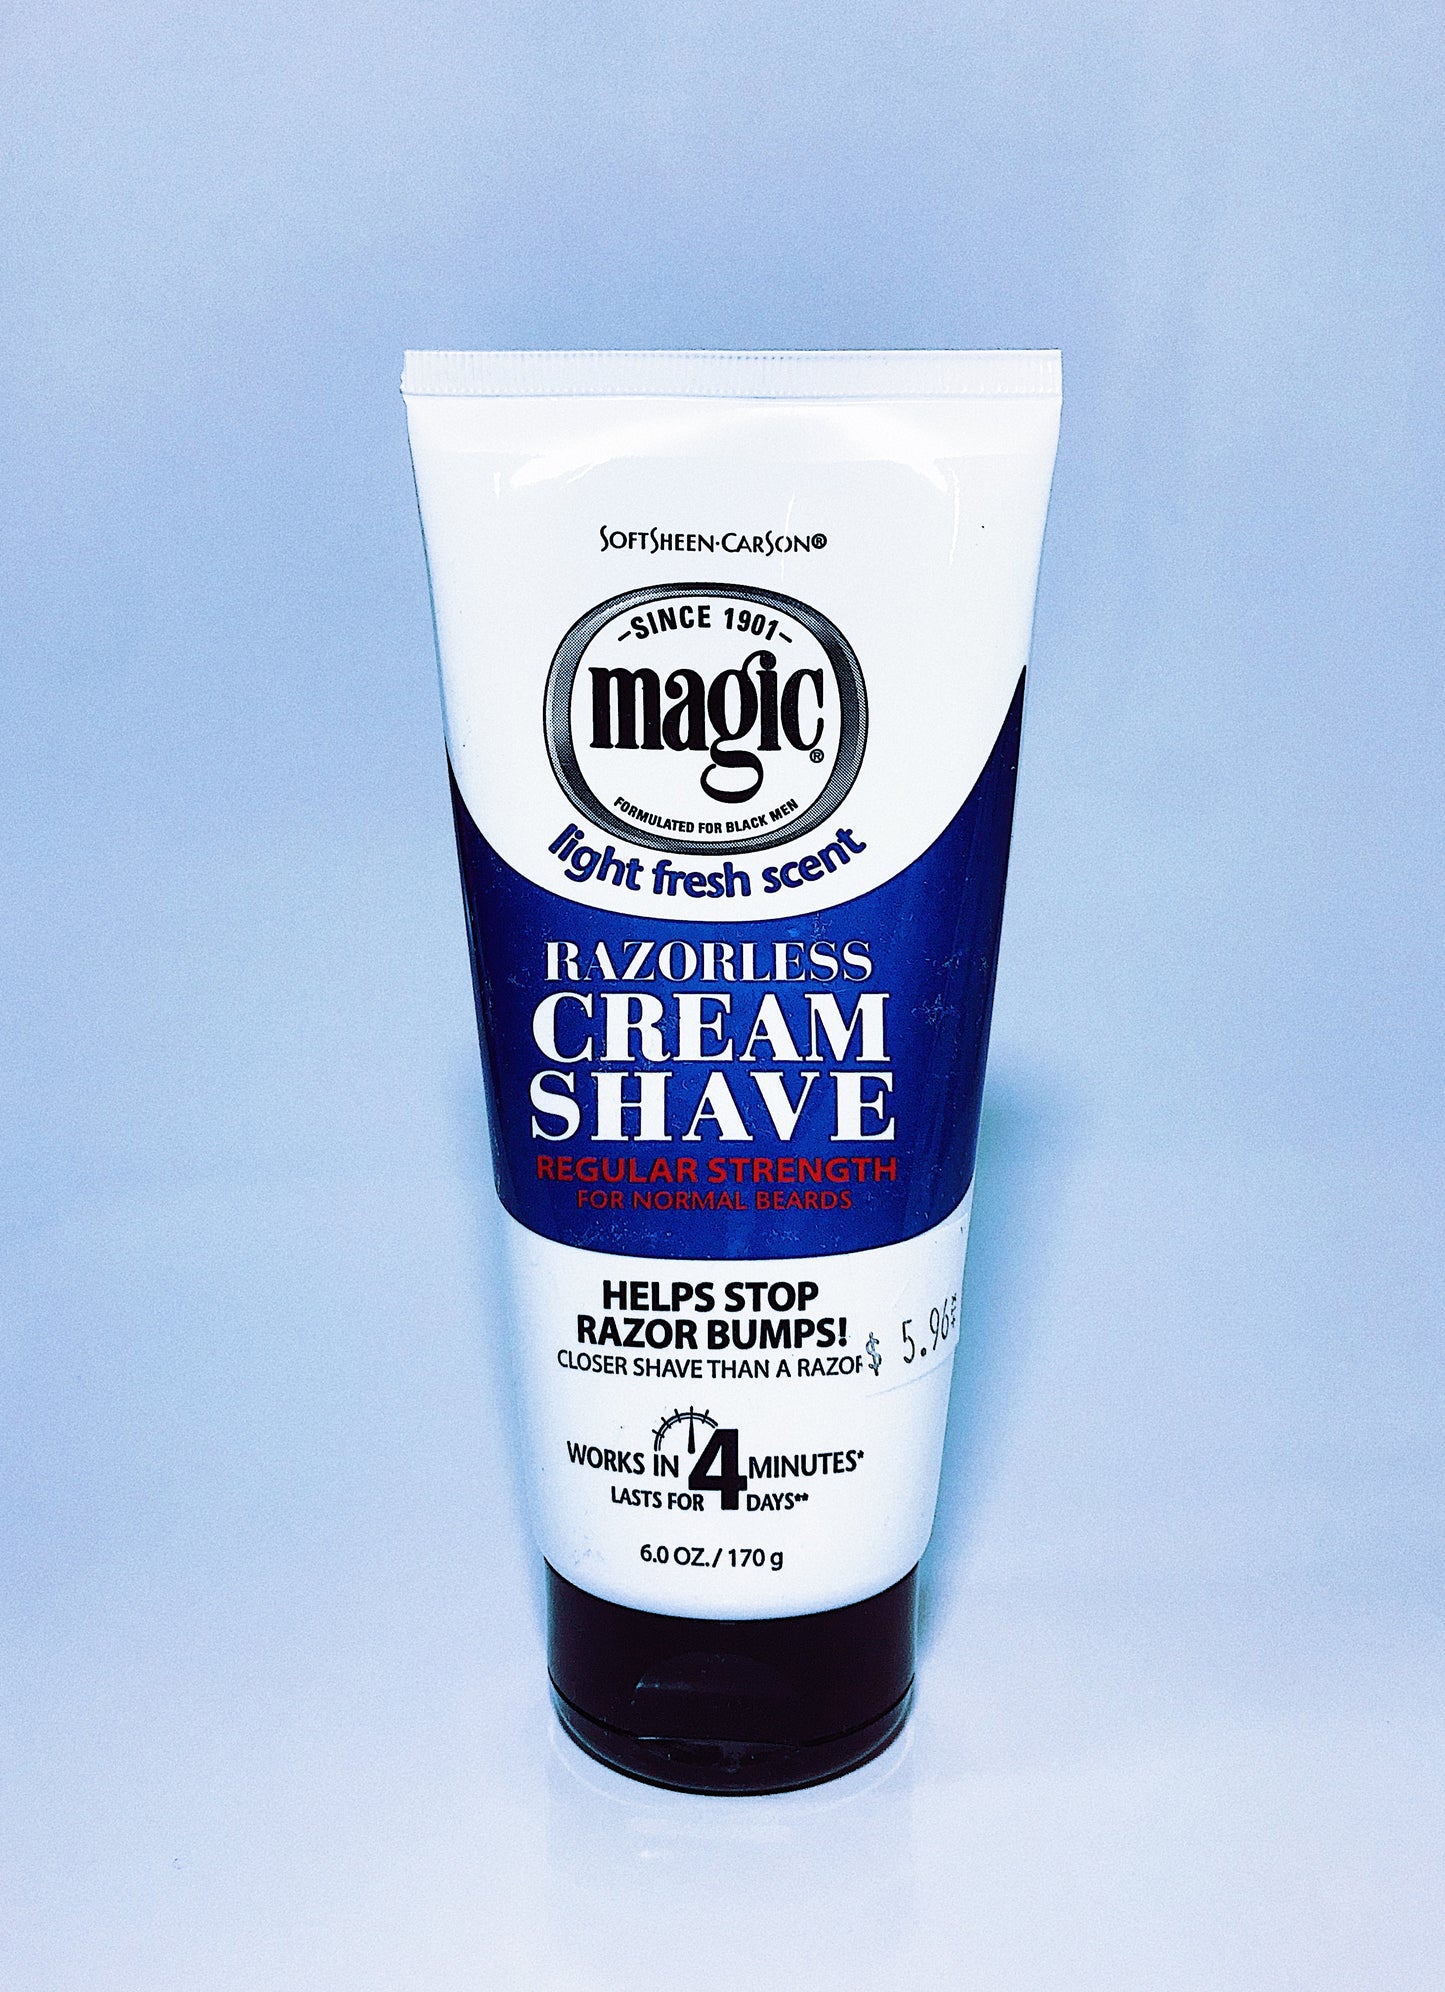 Magic Light Fresh Scent Cream Shave Regular Stenght